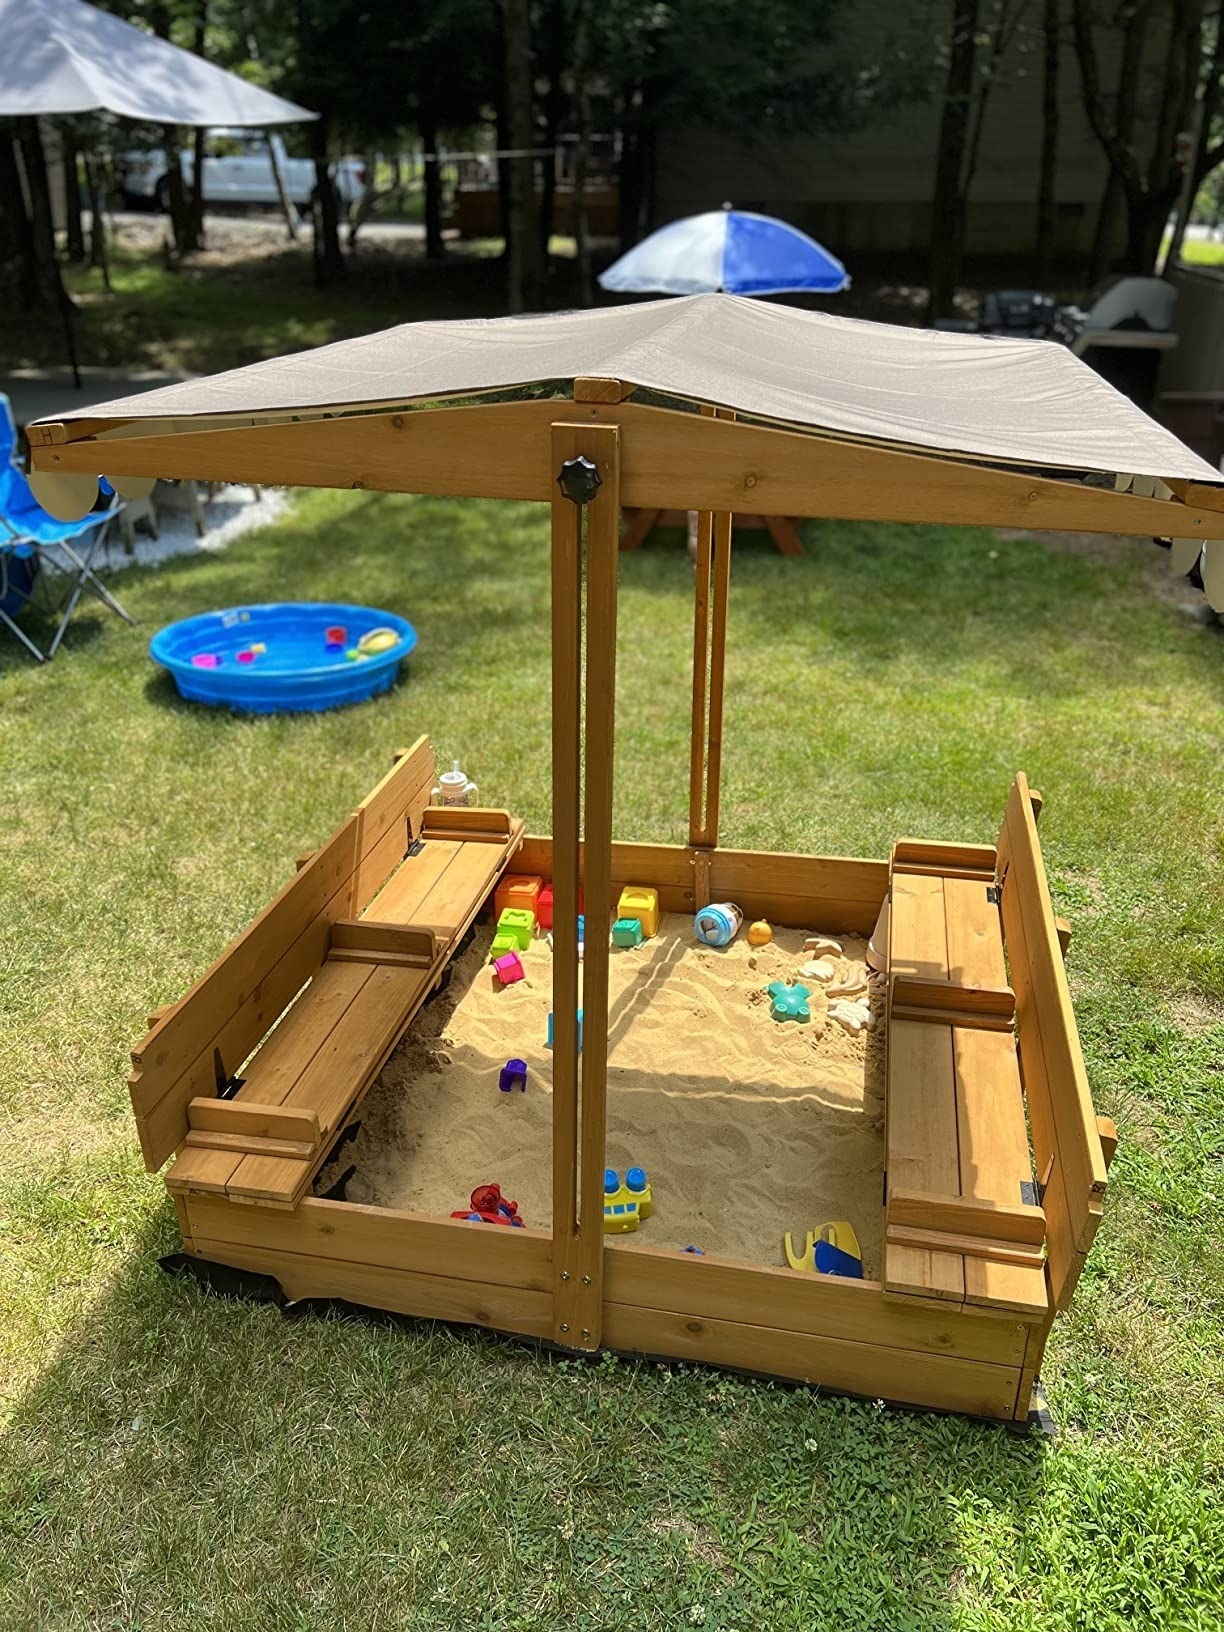 a reviewer photo of the sandbox setup in a backyard